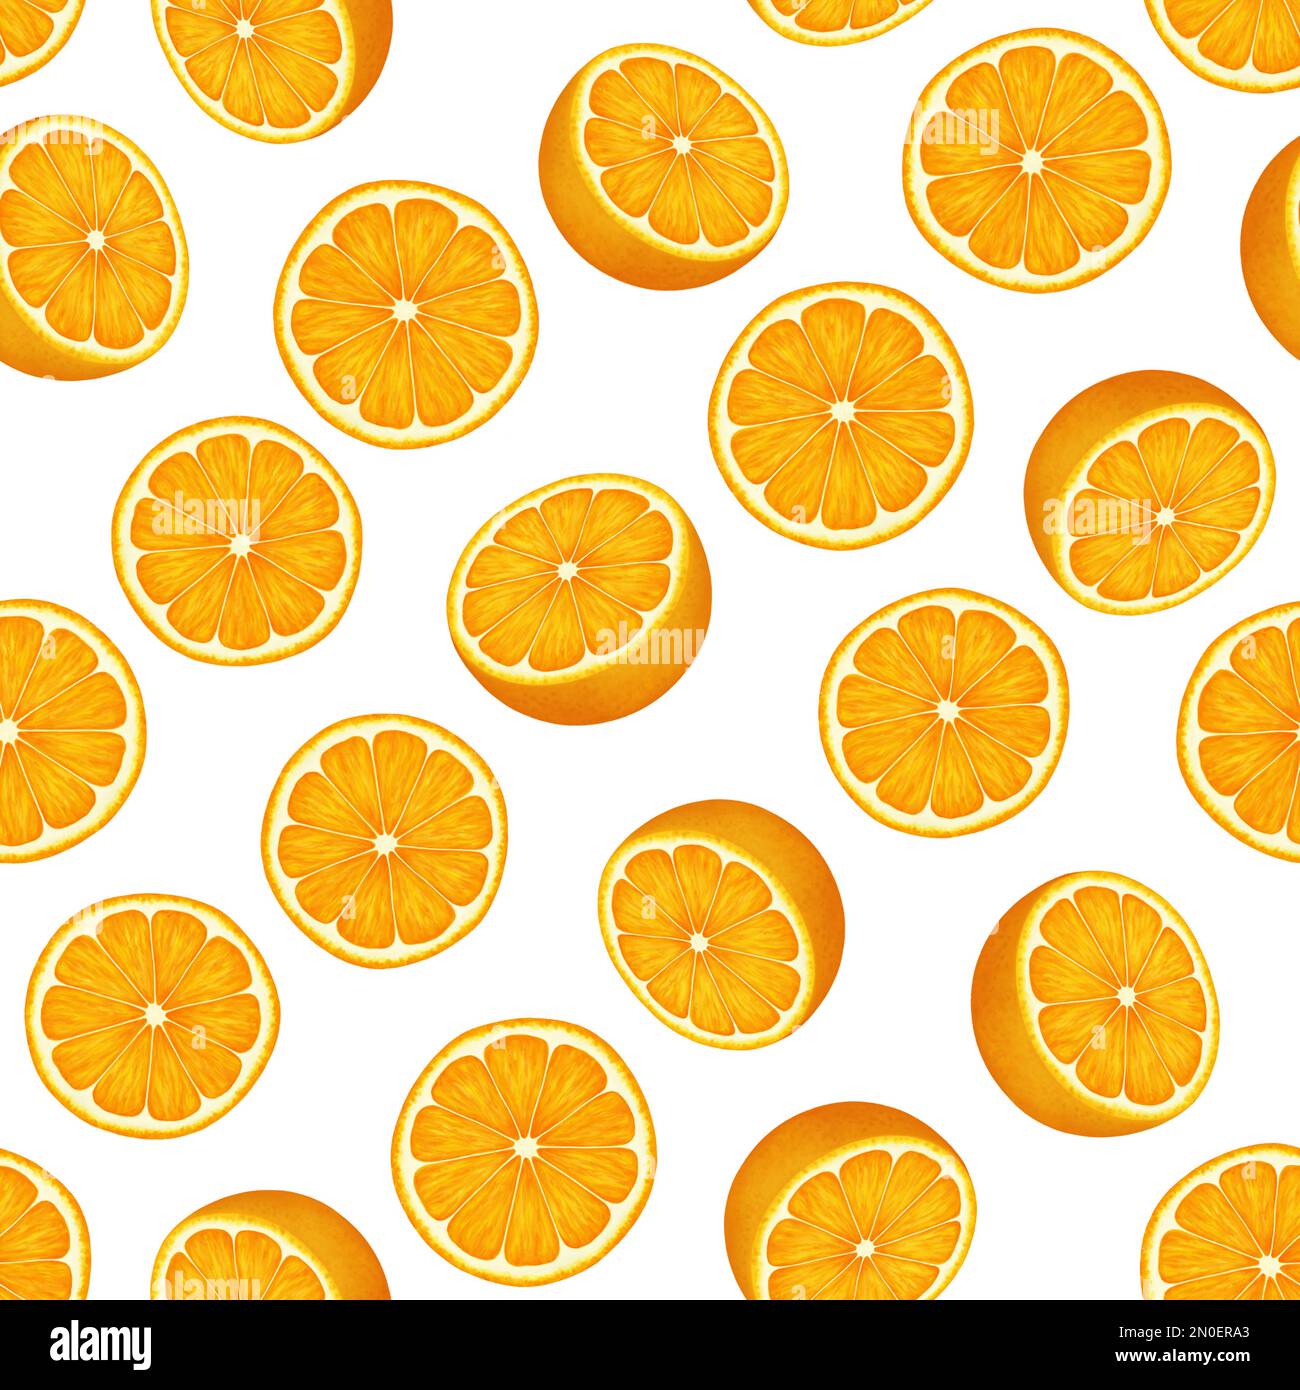 1,476 Screen Print Fruit Images, Stock Photos, 3D objects, & Vectors